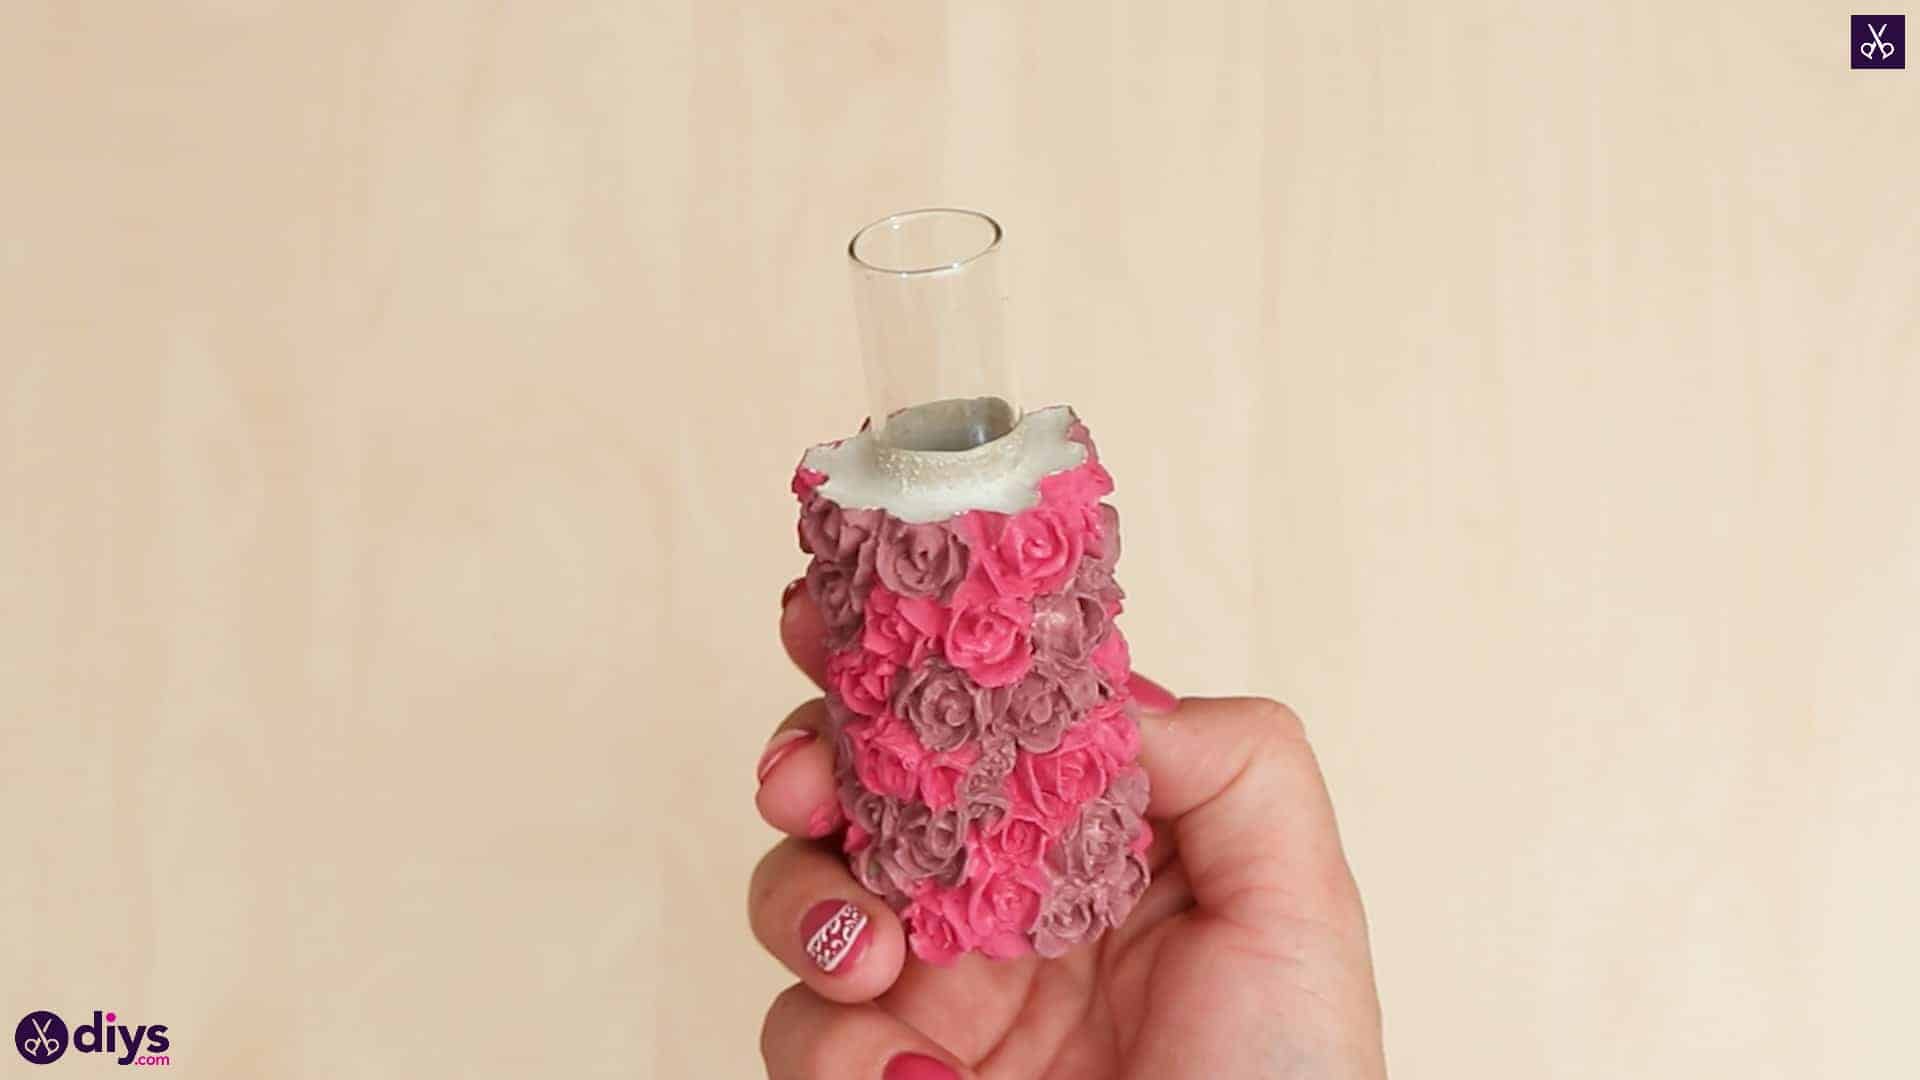 Diy concrete vase with rose pattern